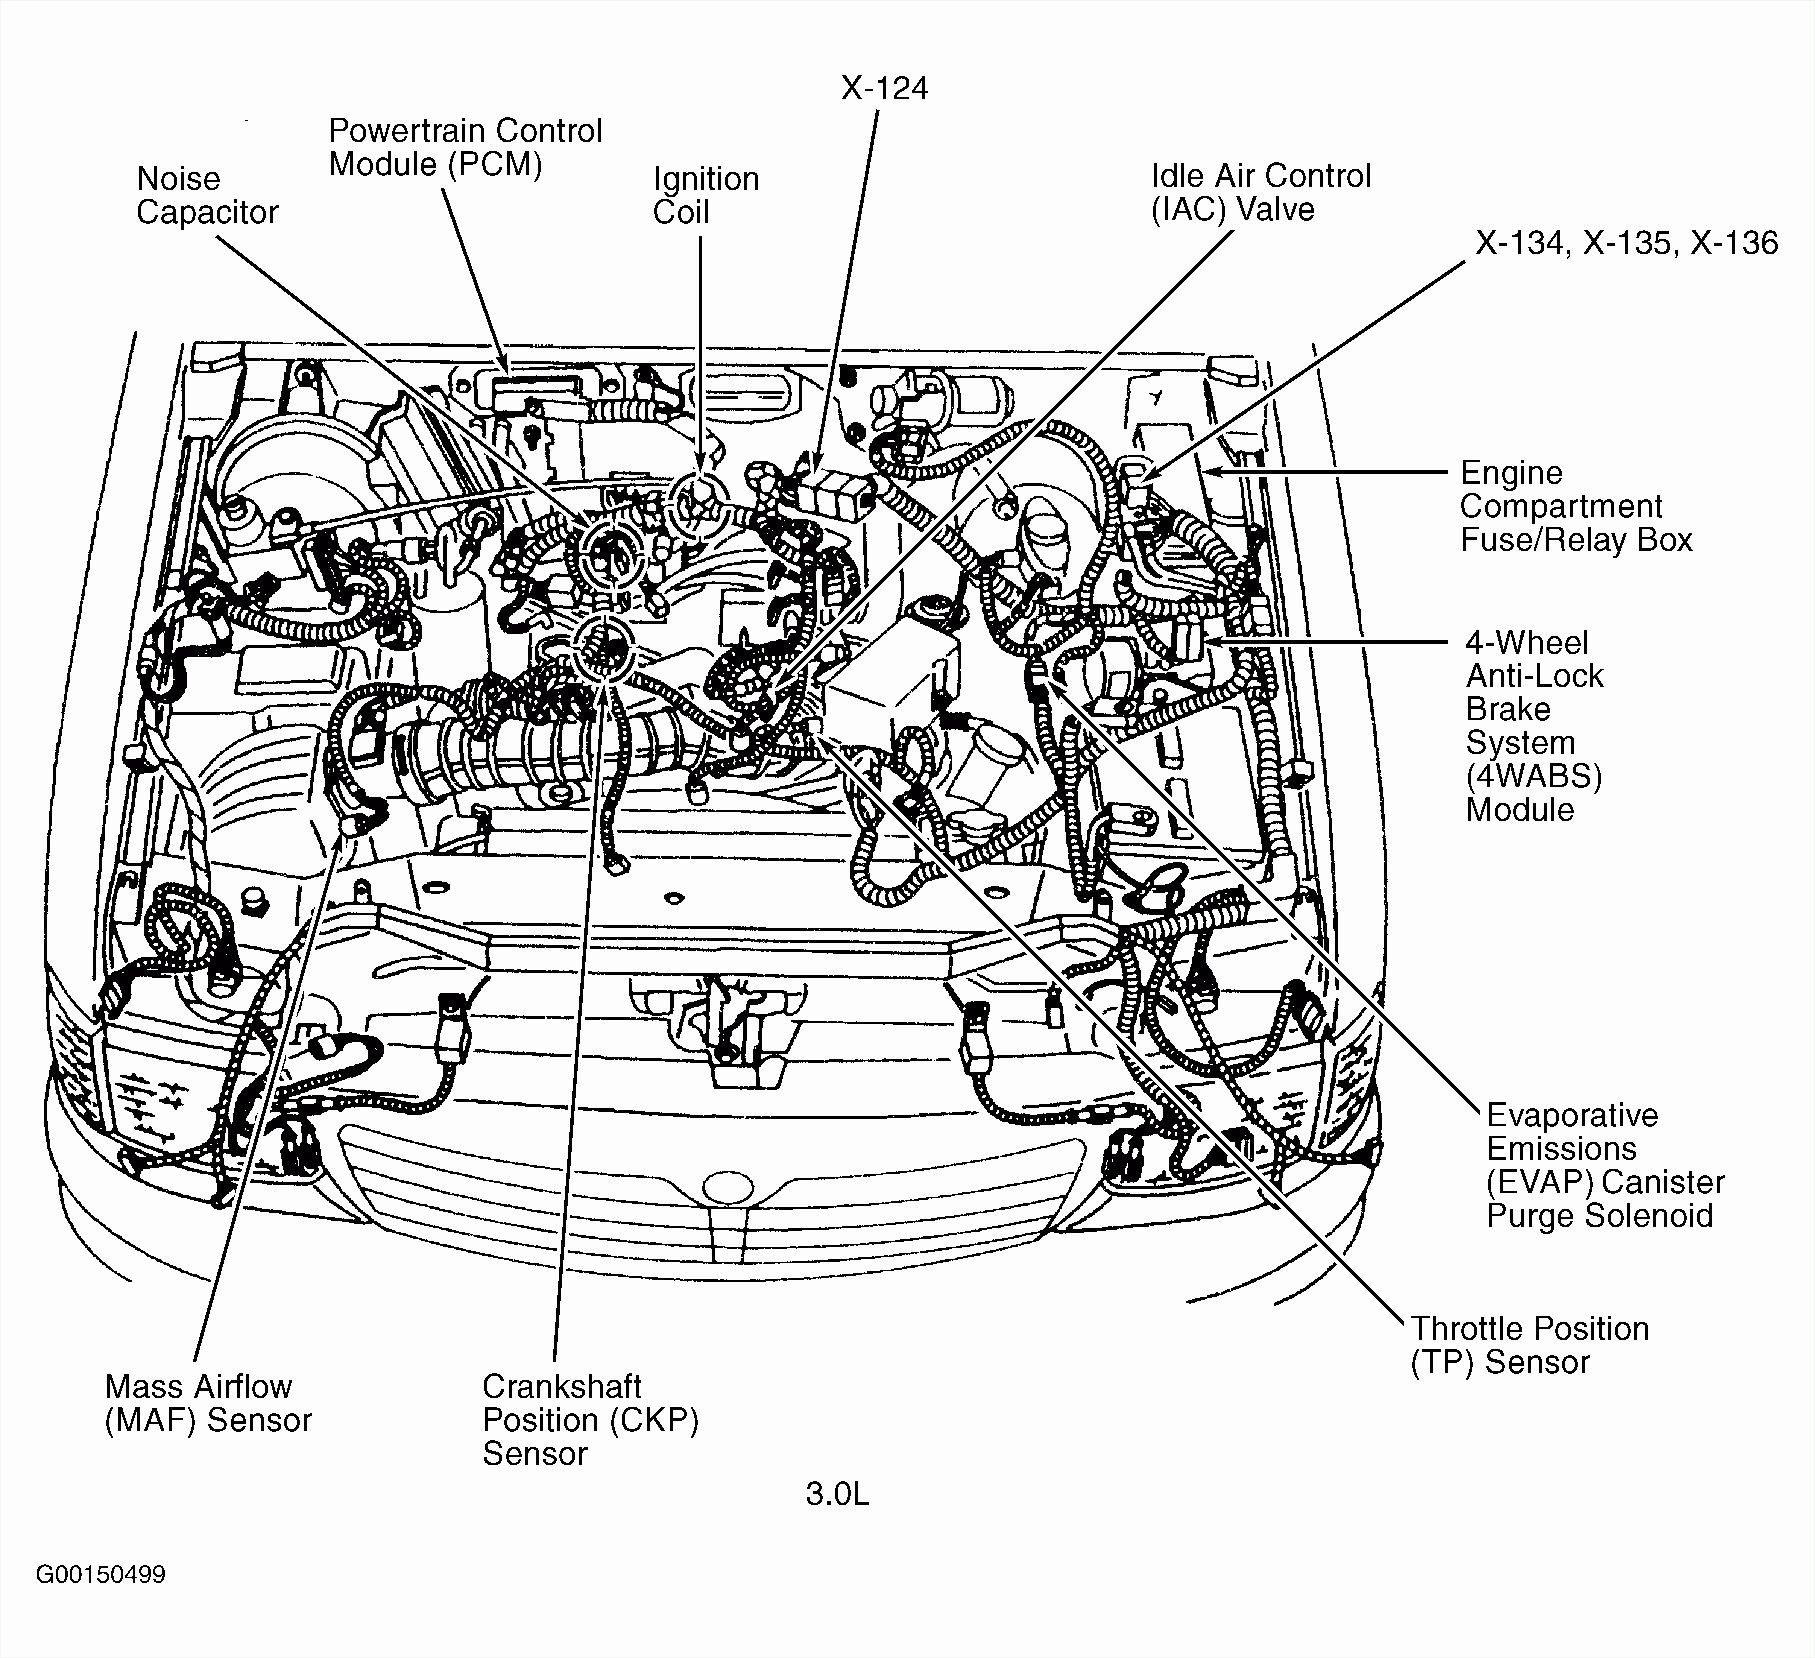 2000 Jeep Cherokee Engine Diagram 1997 Jeep Cherokee Engine Diagram Wiring Diagram Paper Of 2000 Jeep Cherokee Engine Diagram